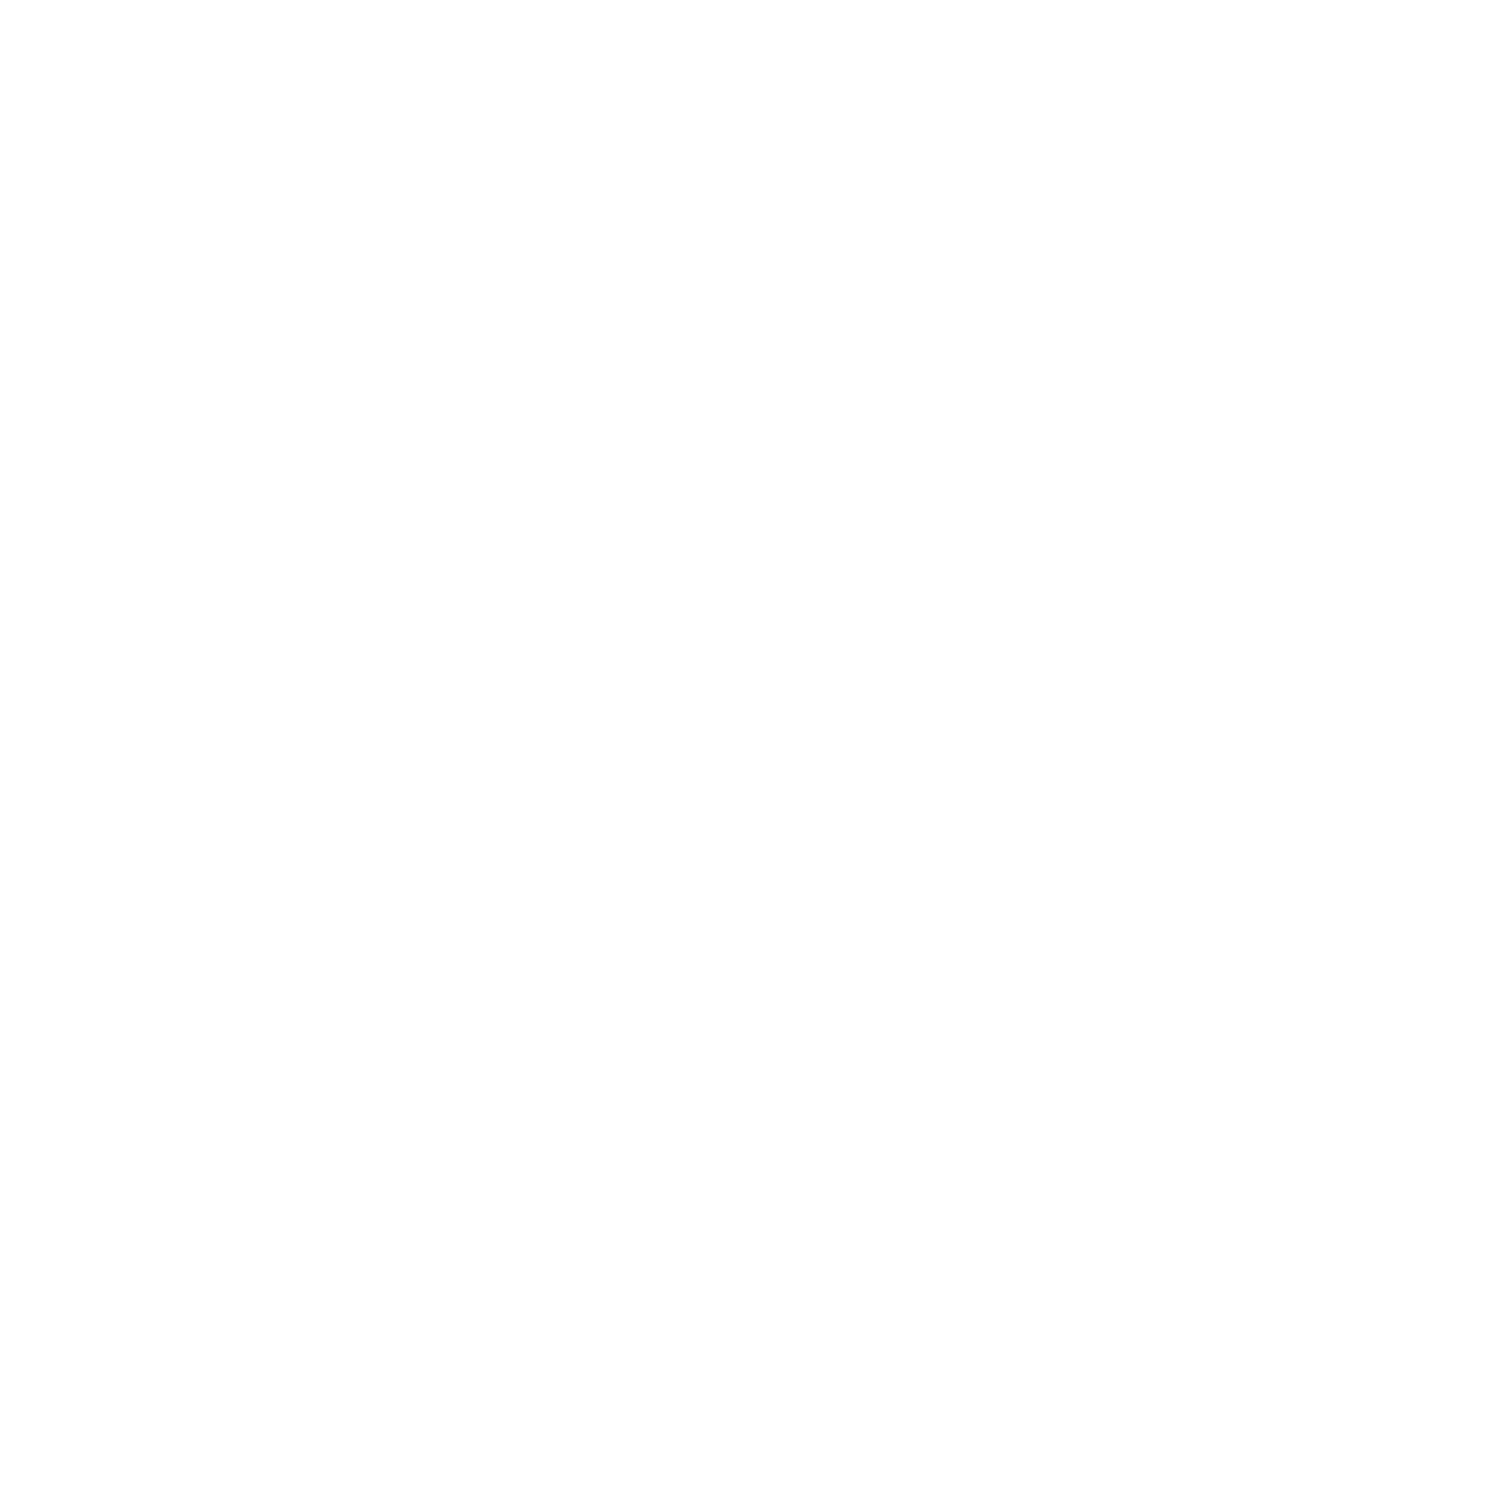 Gomez BBQ - Indianapolis Craft Barbecue